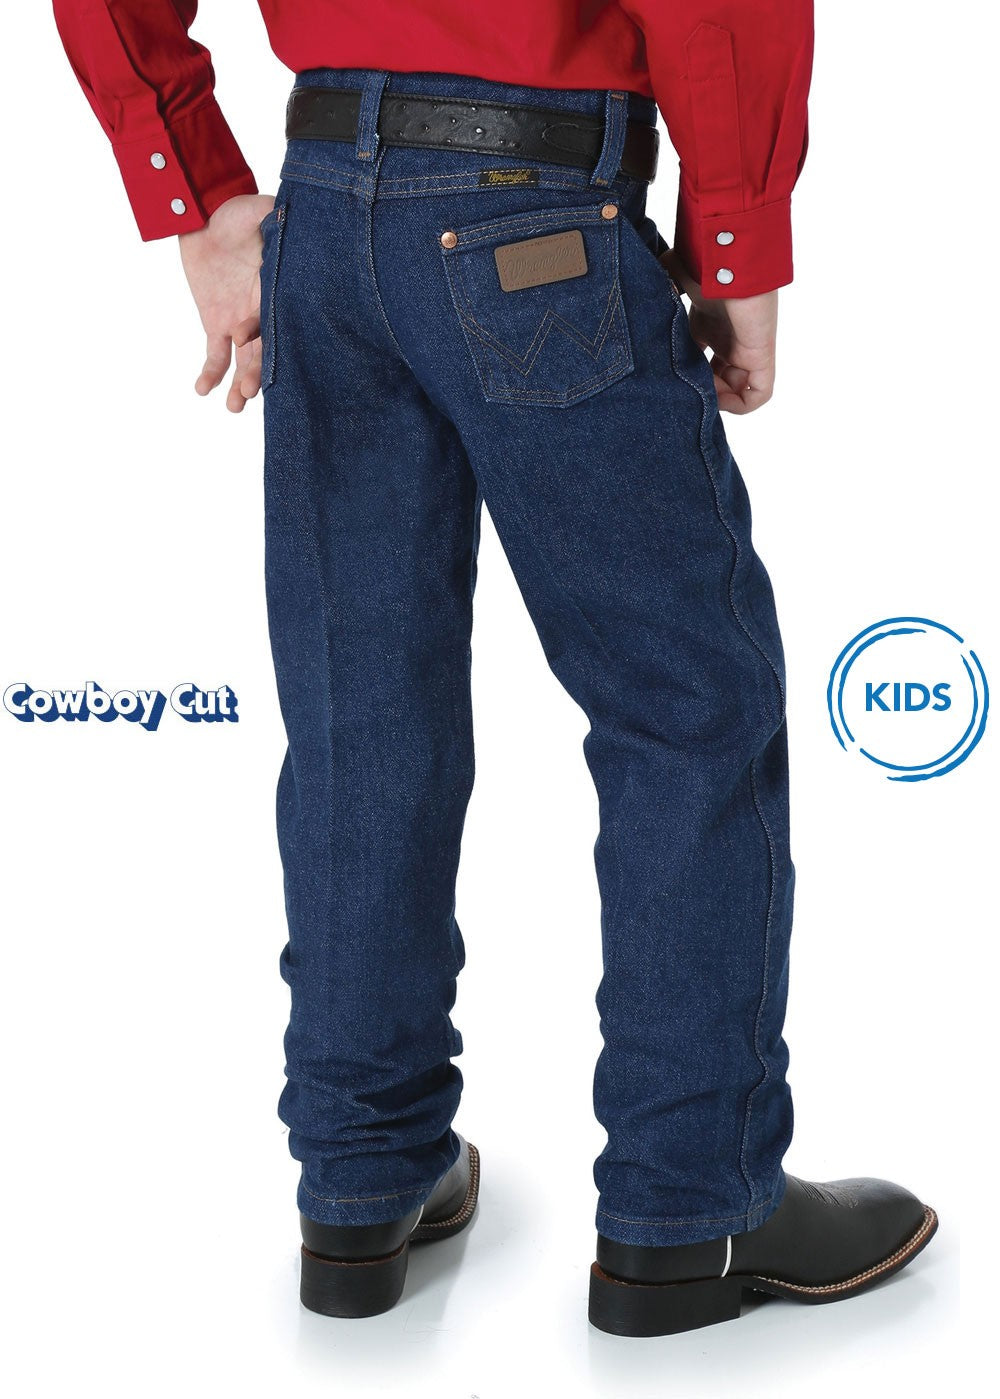 Wrangler - Kids Original Cowboy Cut Jeans Slim Fit 13MWZBPSLI at Buffalo Bills Western